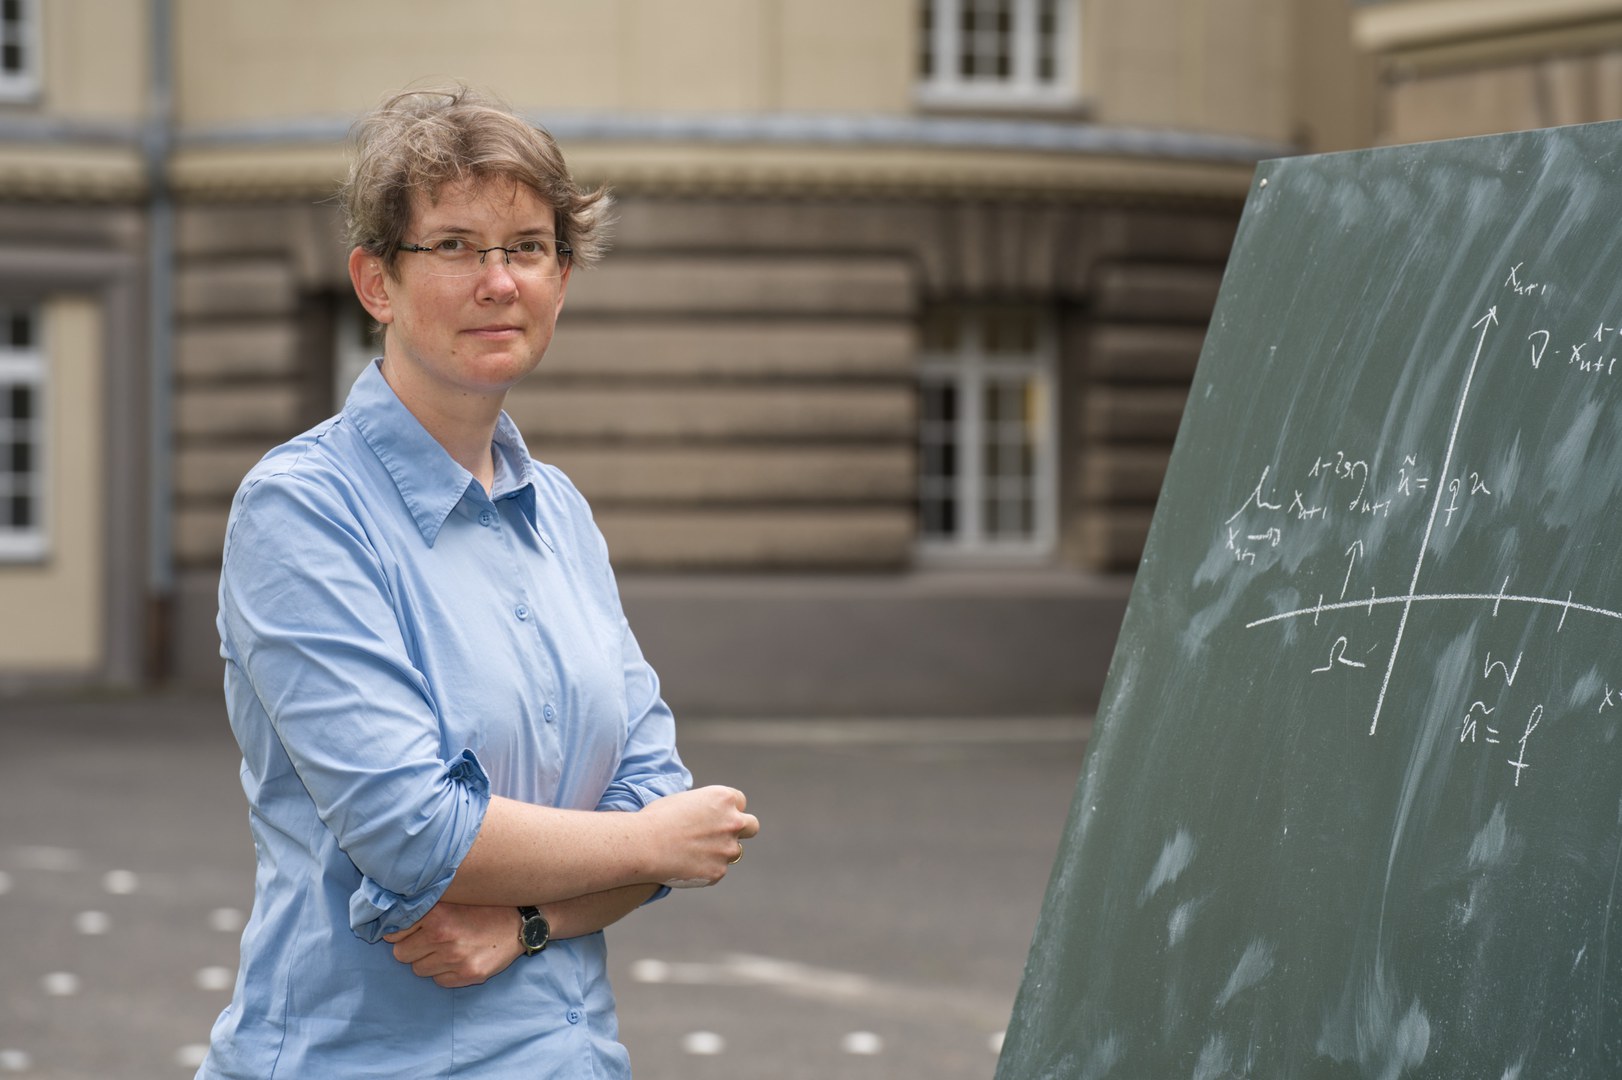 The mathematician Professor Angkana Rüland